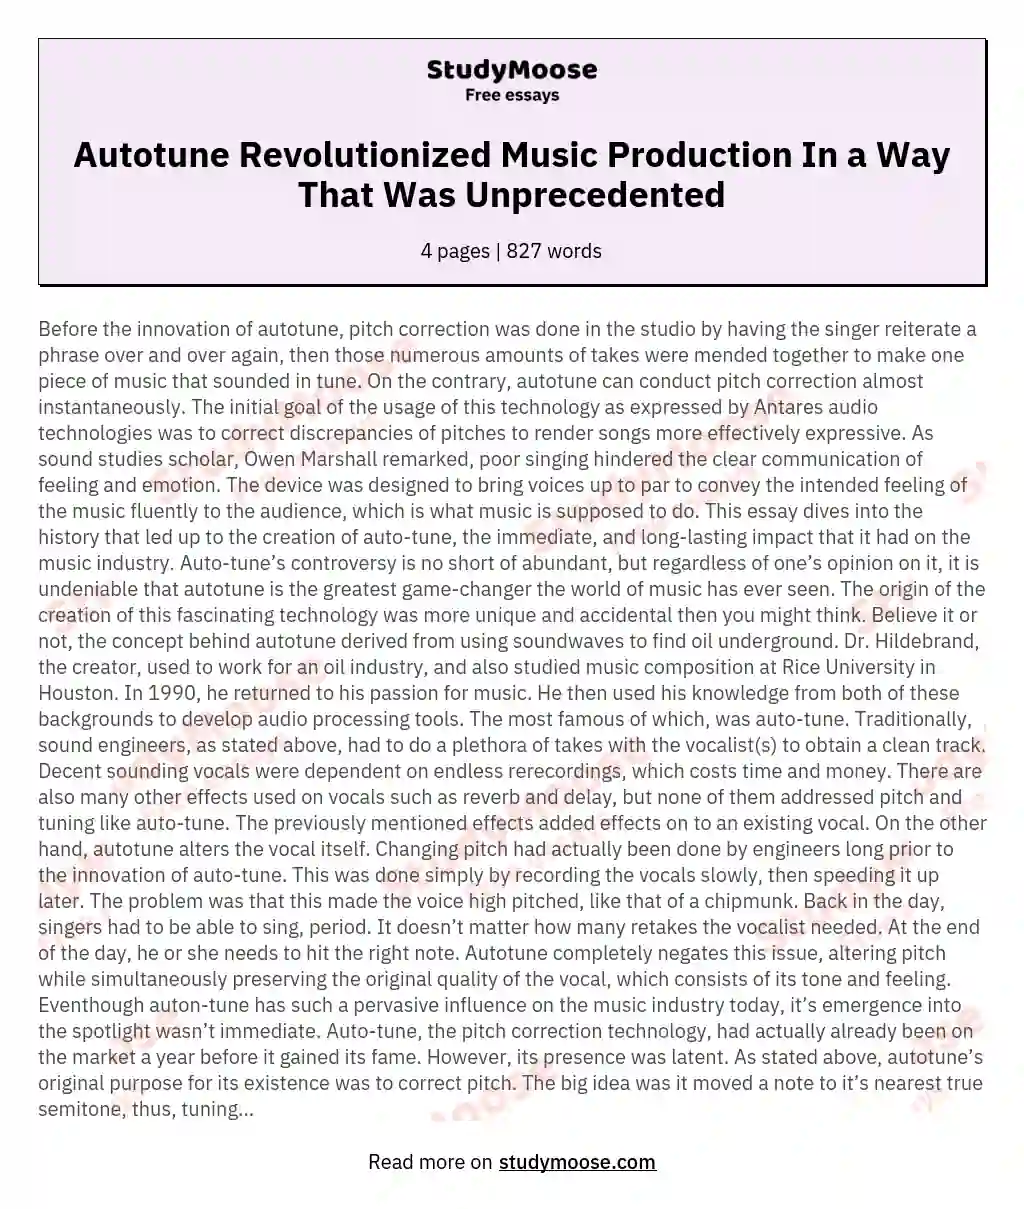 Autotune Revolutionized Music Production In a Way That Was Unprecedented essay